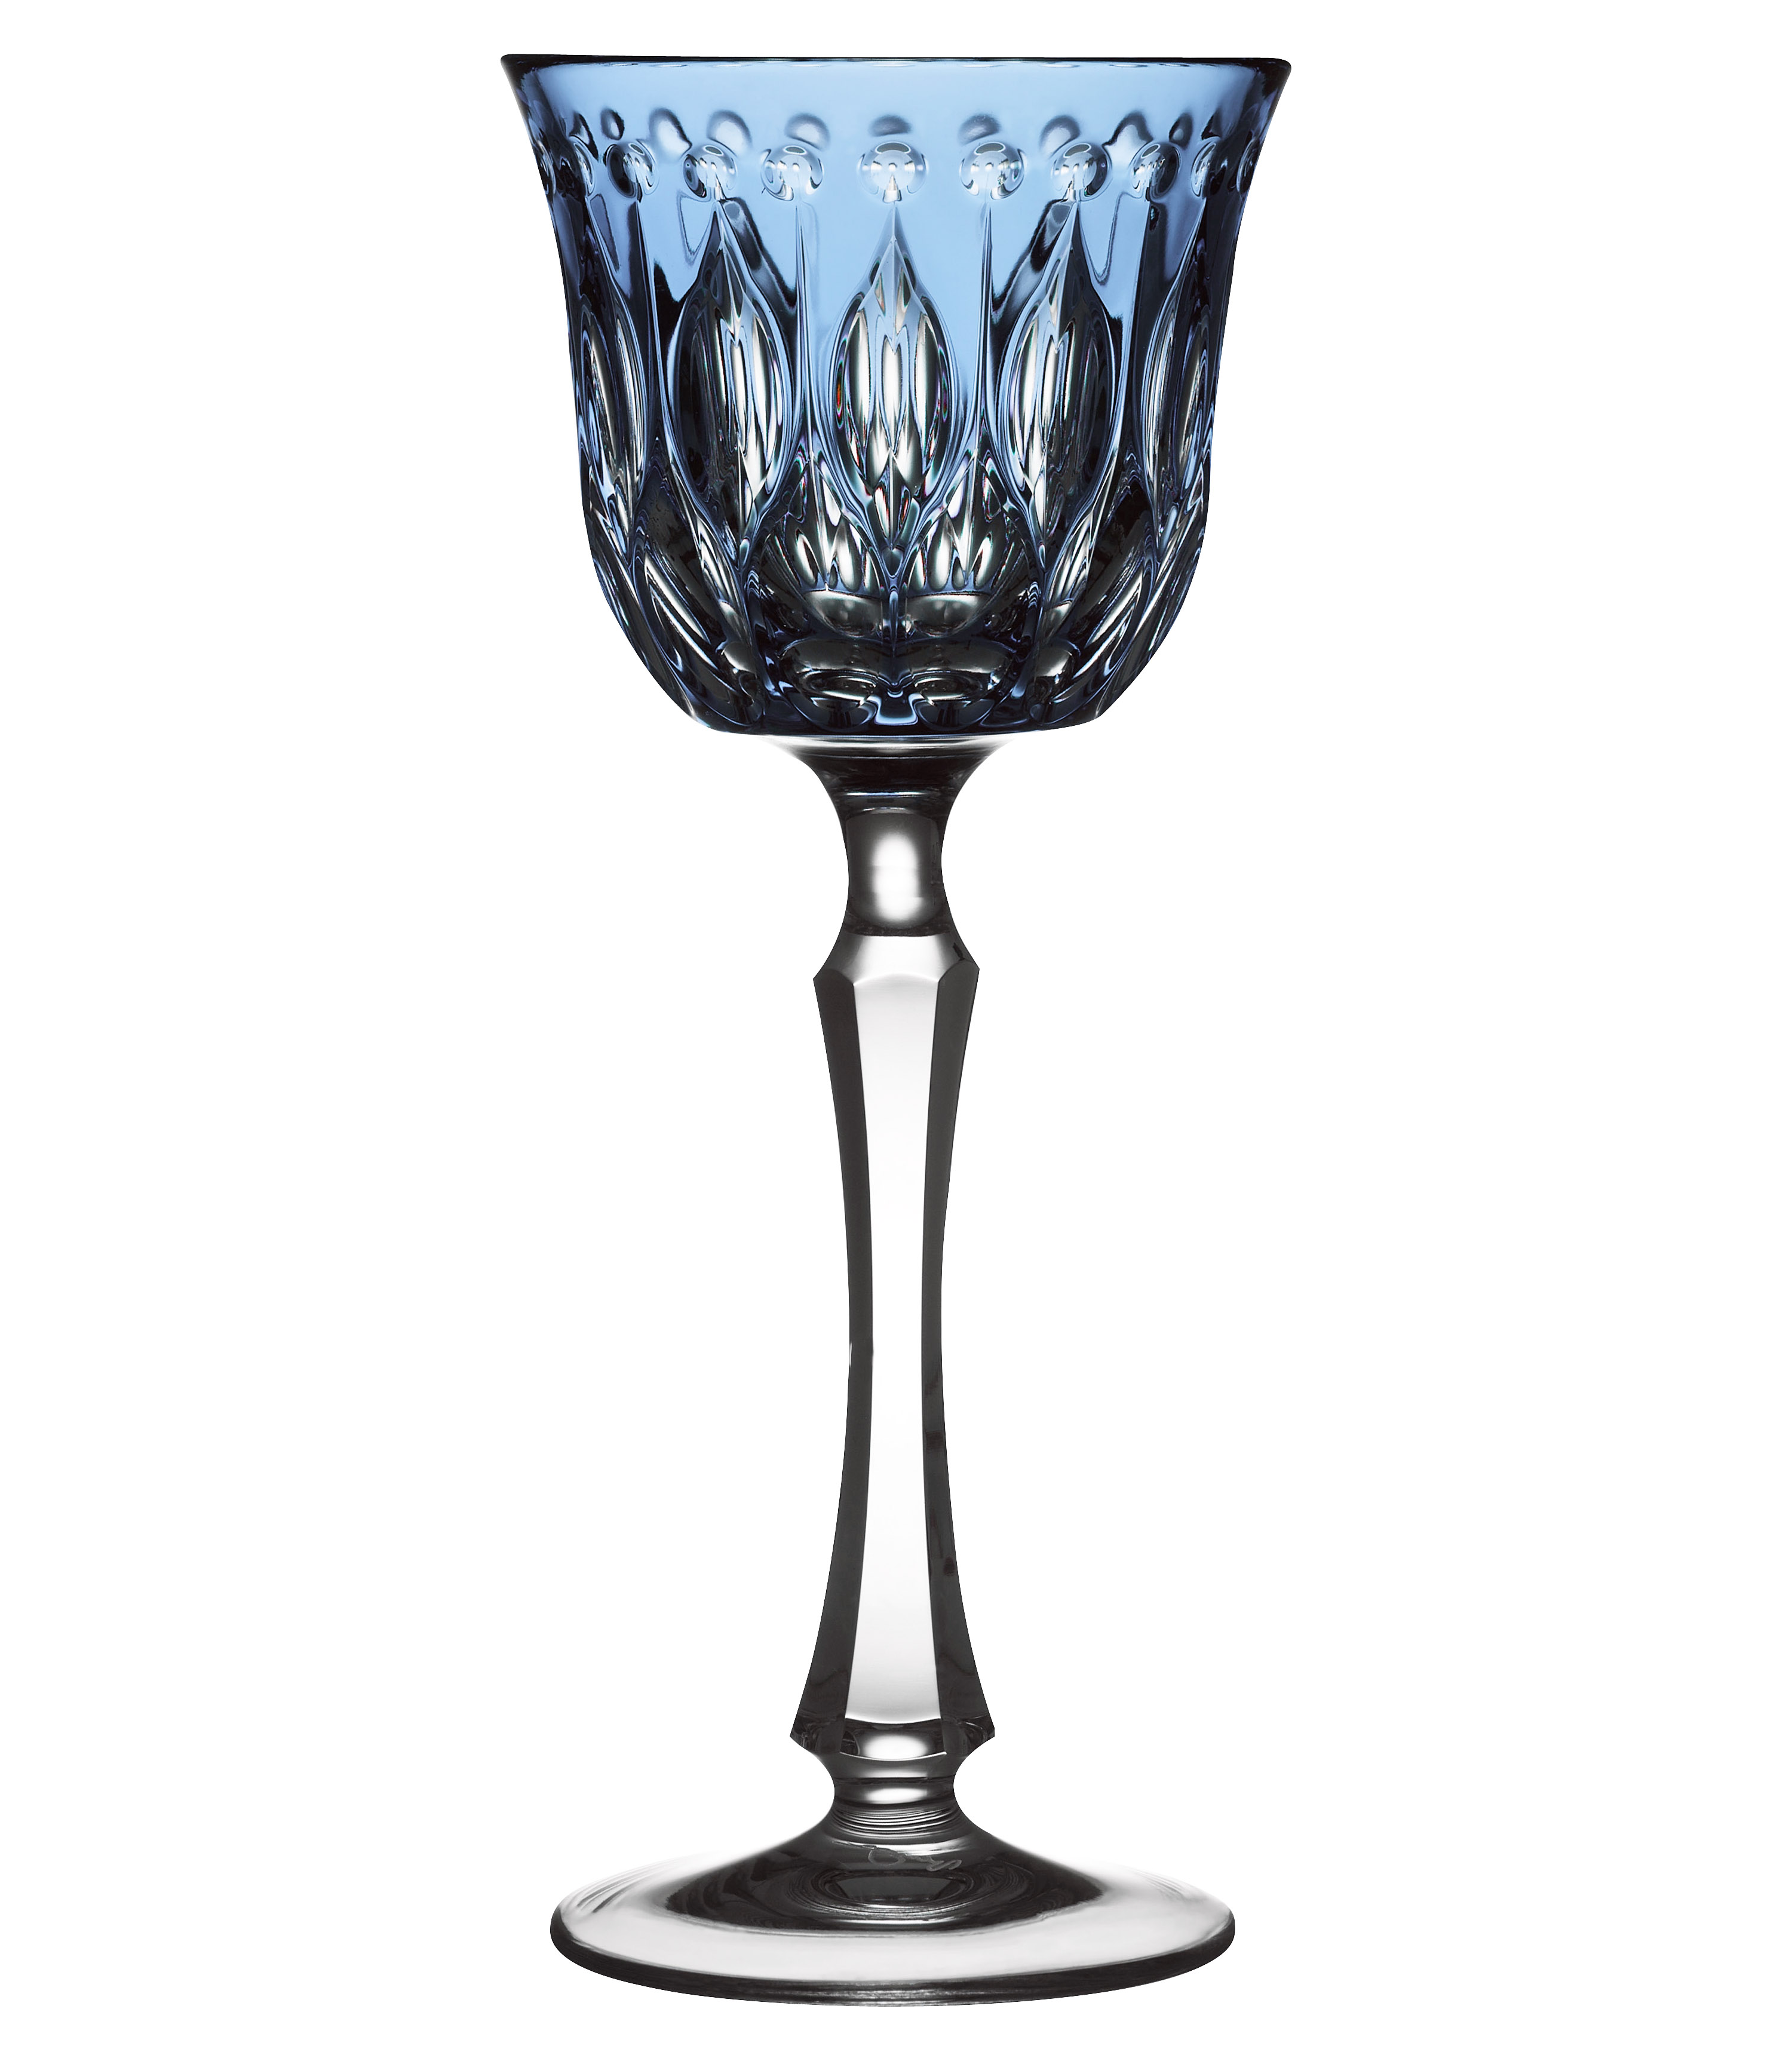 Varga Lisbon wine glass. Fancy crystal makes wine taste even